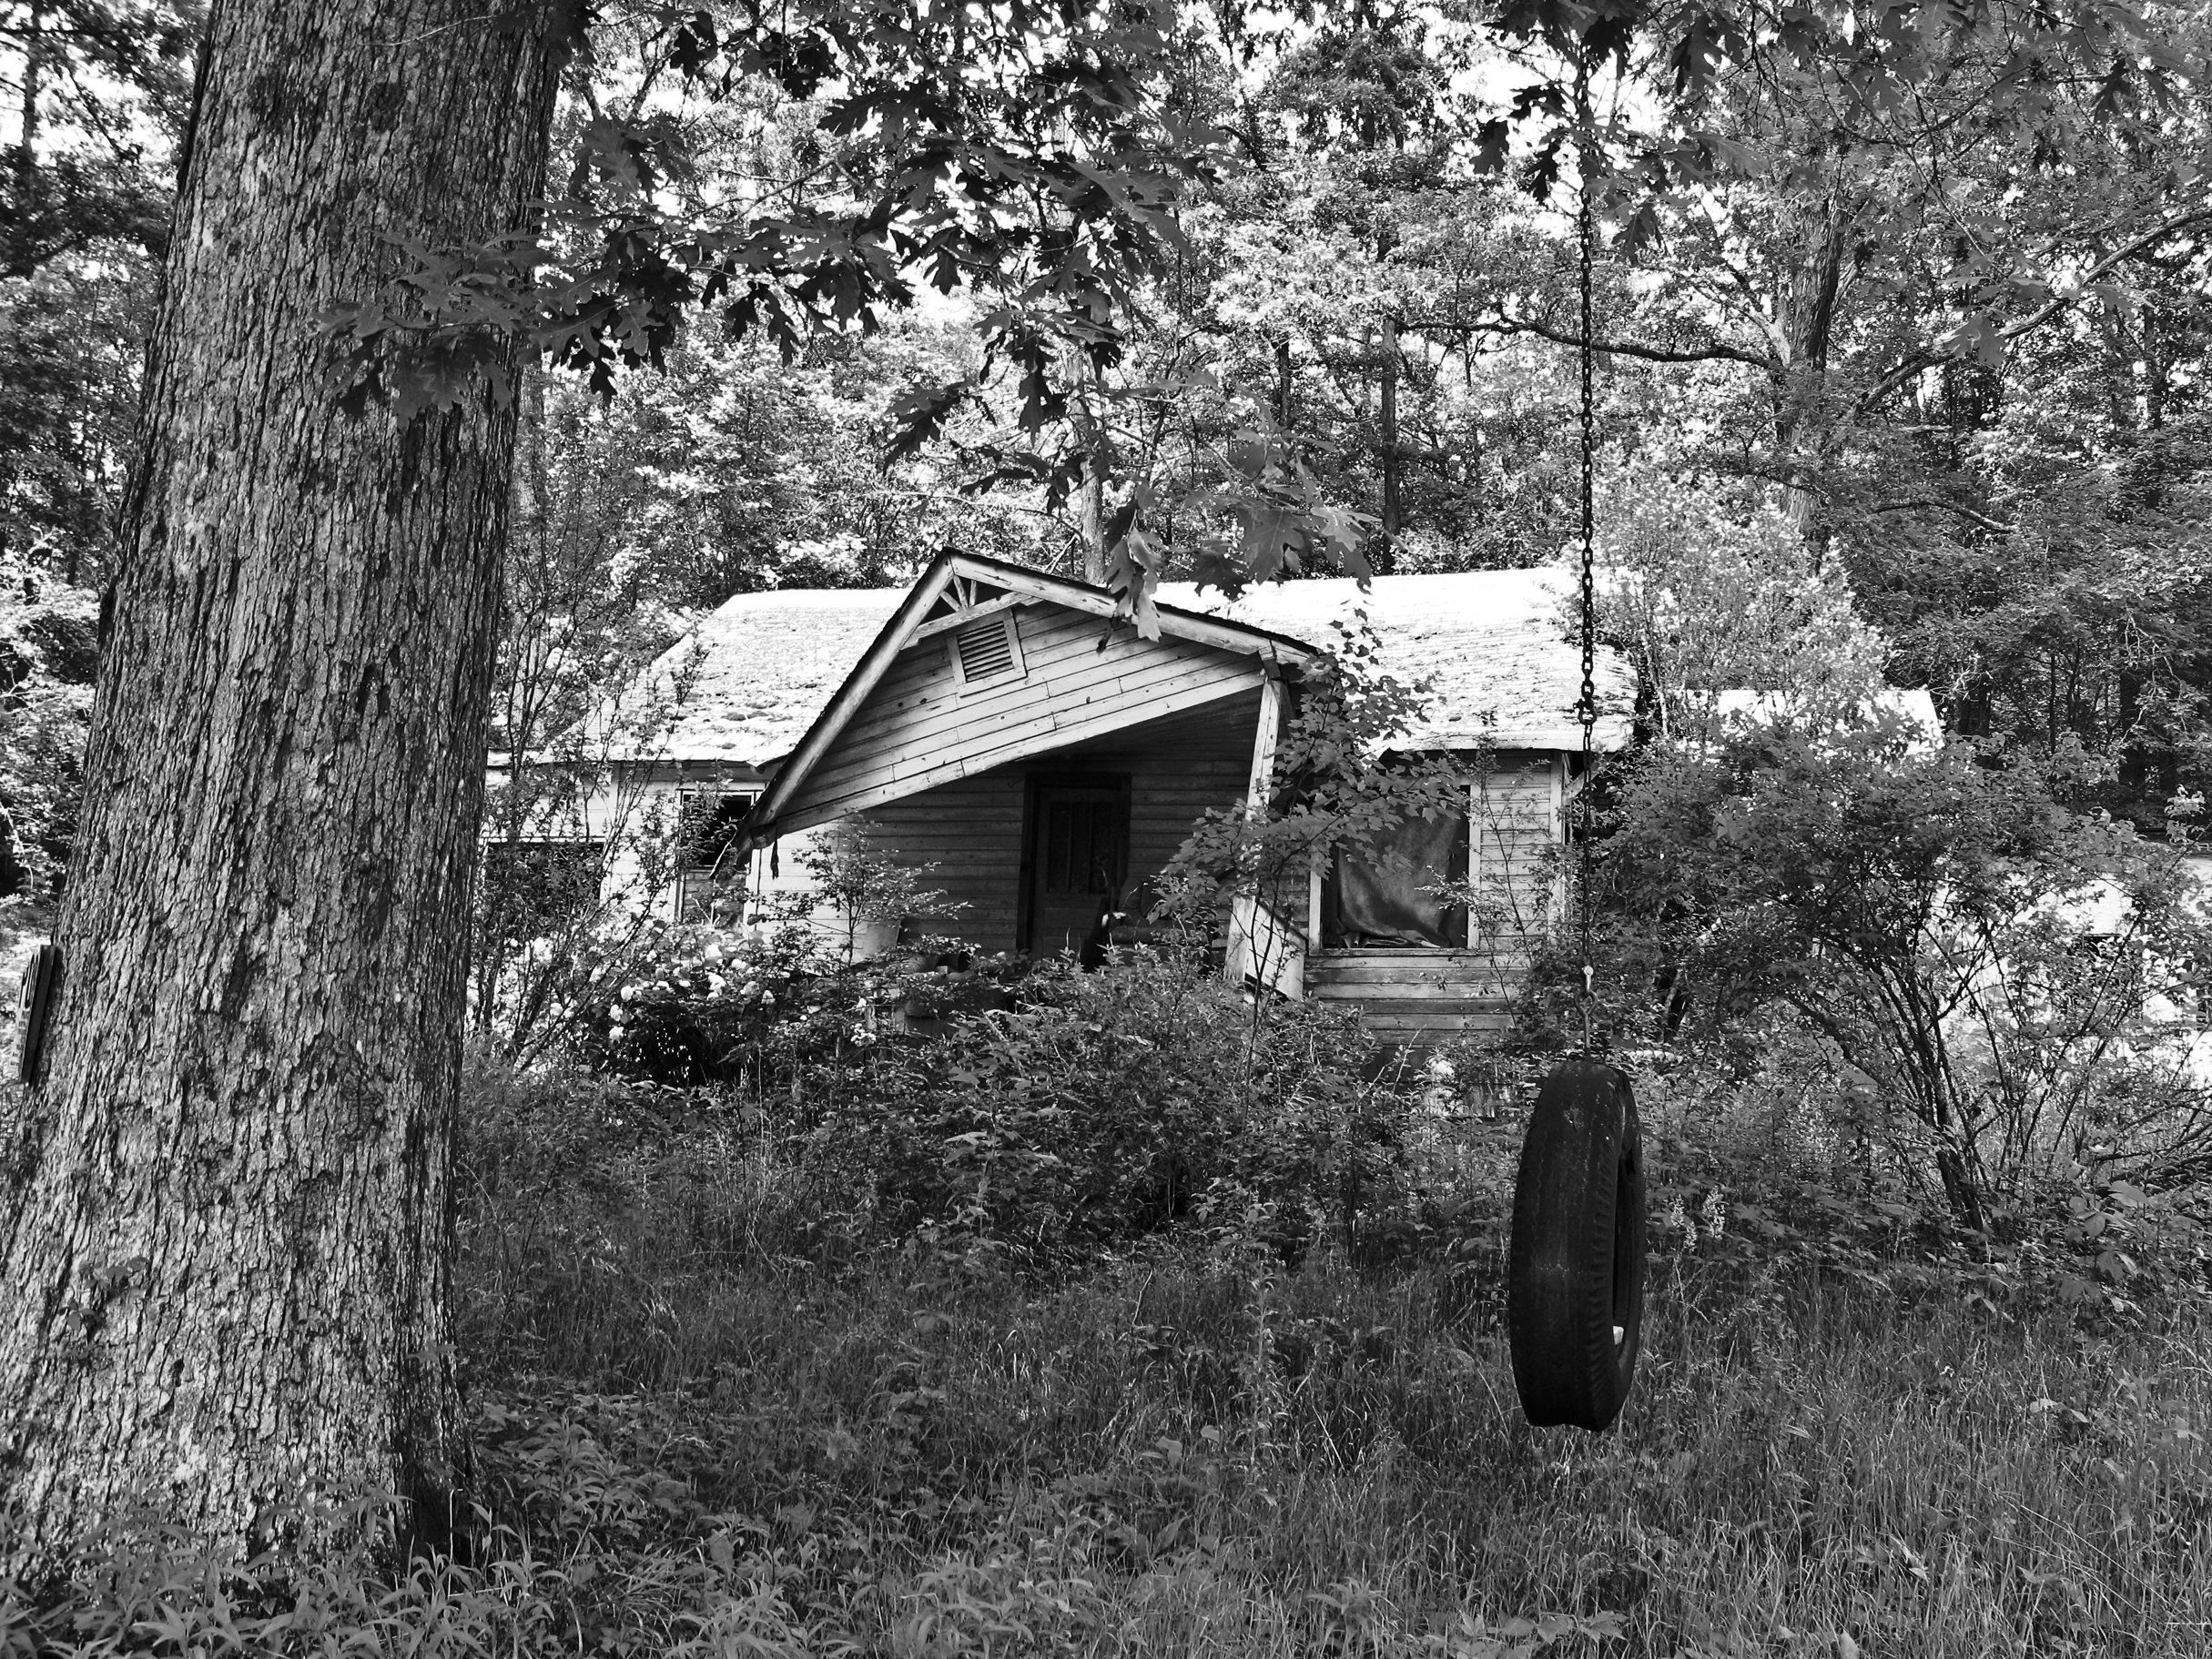    House with Tire&nbsp;Swing  , Fannin County, GA, 2013. B&amp;W HDR digital image. 